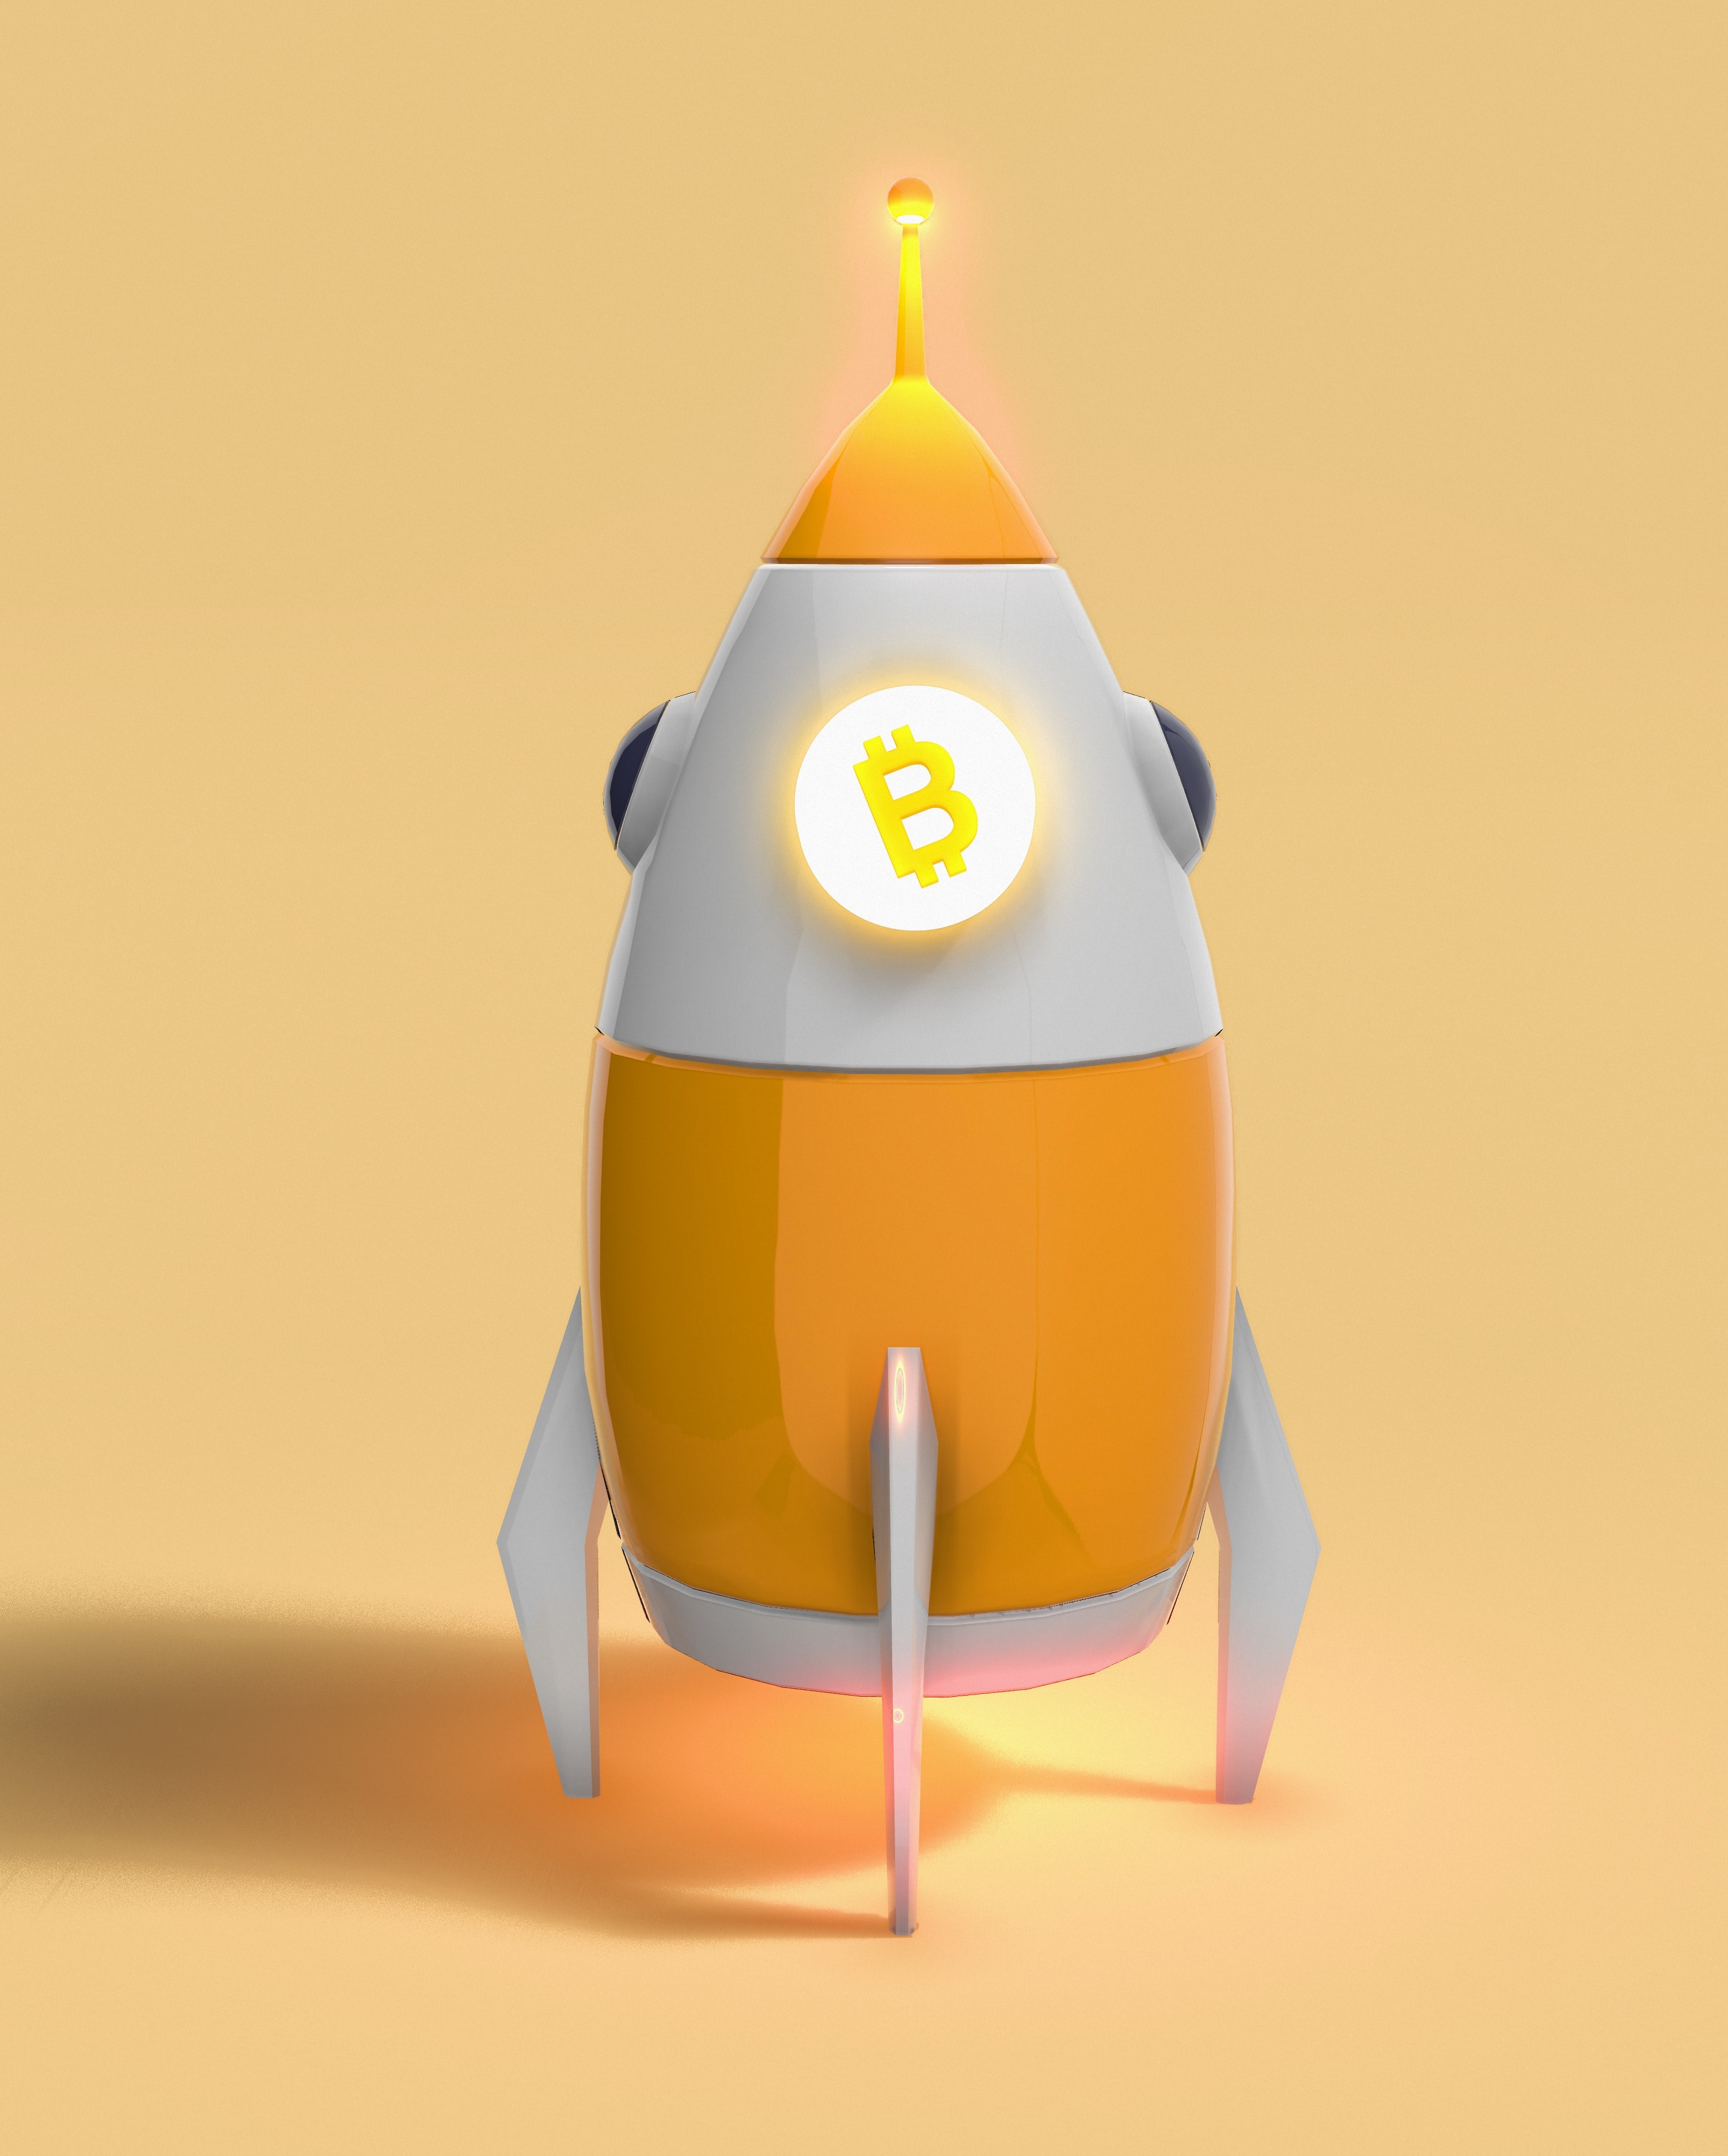 Blender: How to Model a Cartoon Rocket 